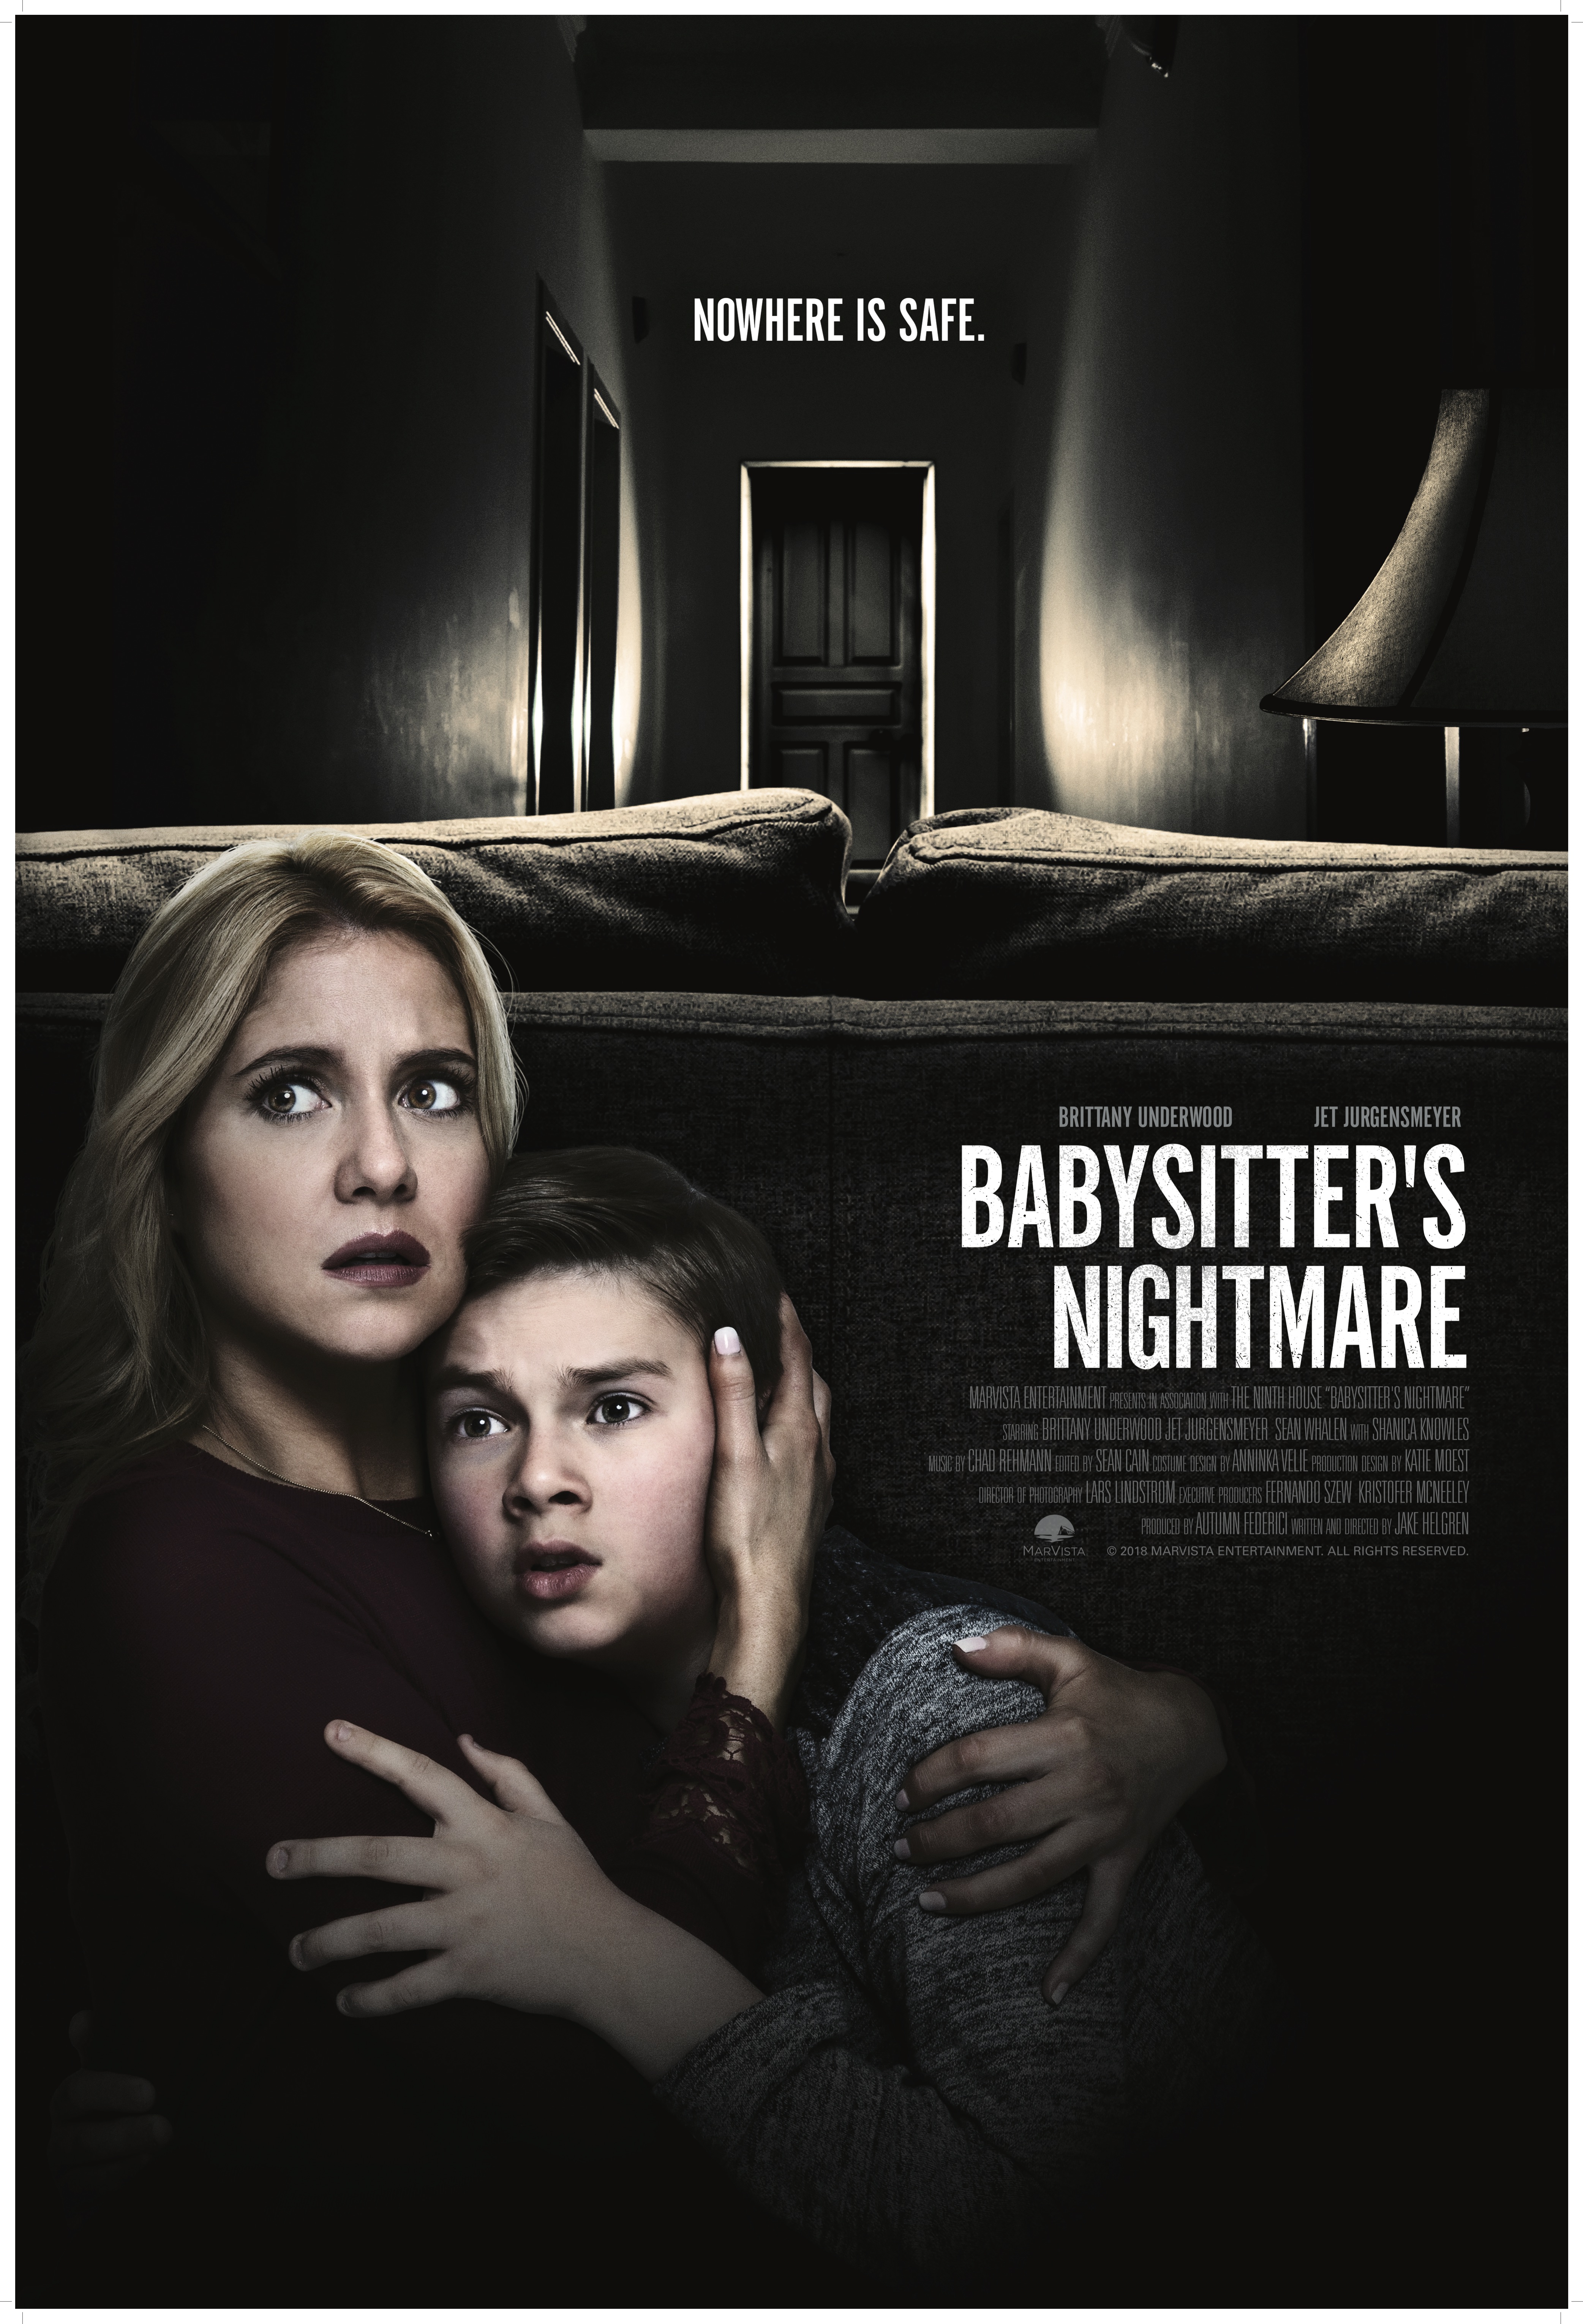 Babysitter's Nightmare (2018) starring Brittany Underwood on DVD on DVD